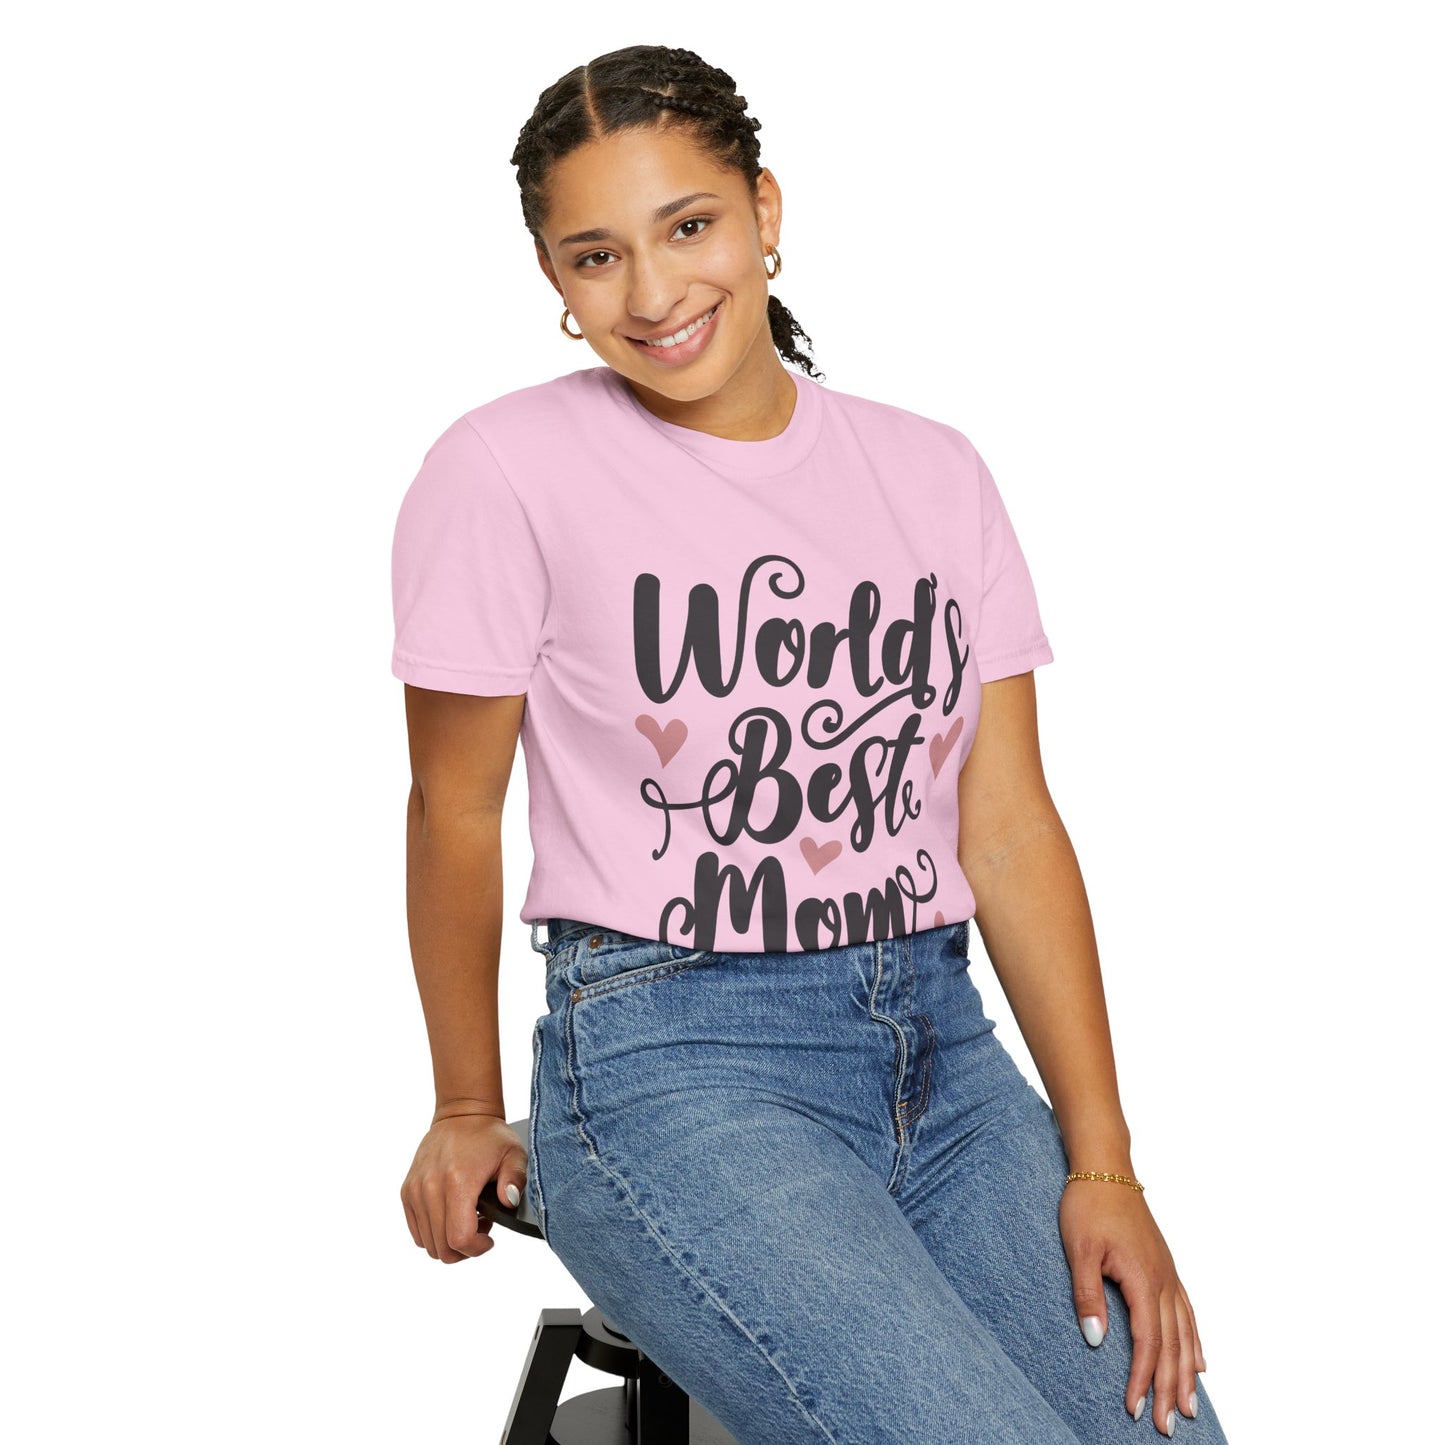 Worl best mom - Unisex Garment-Dyed T-shirt